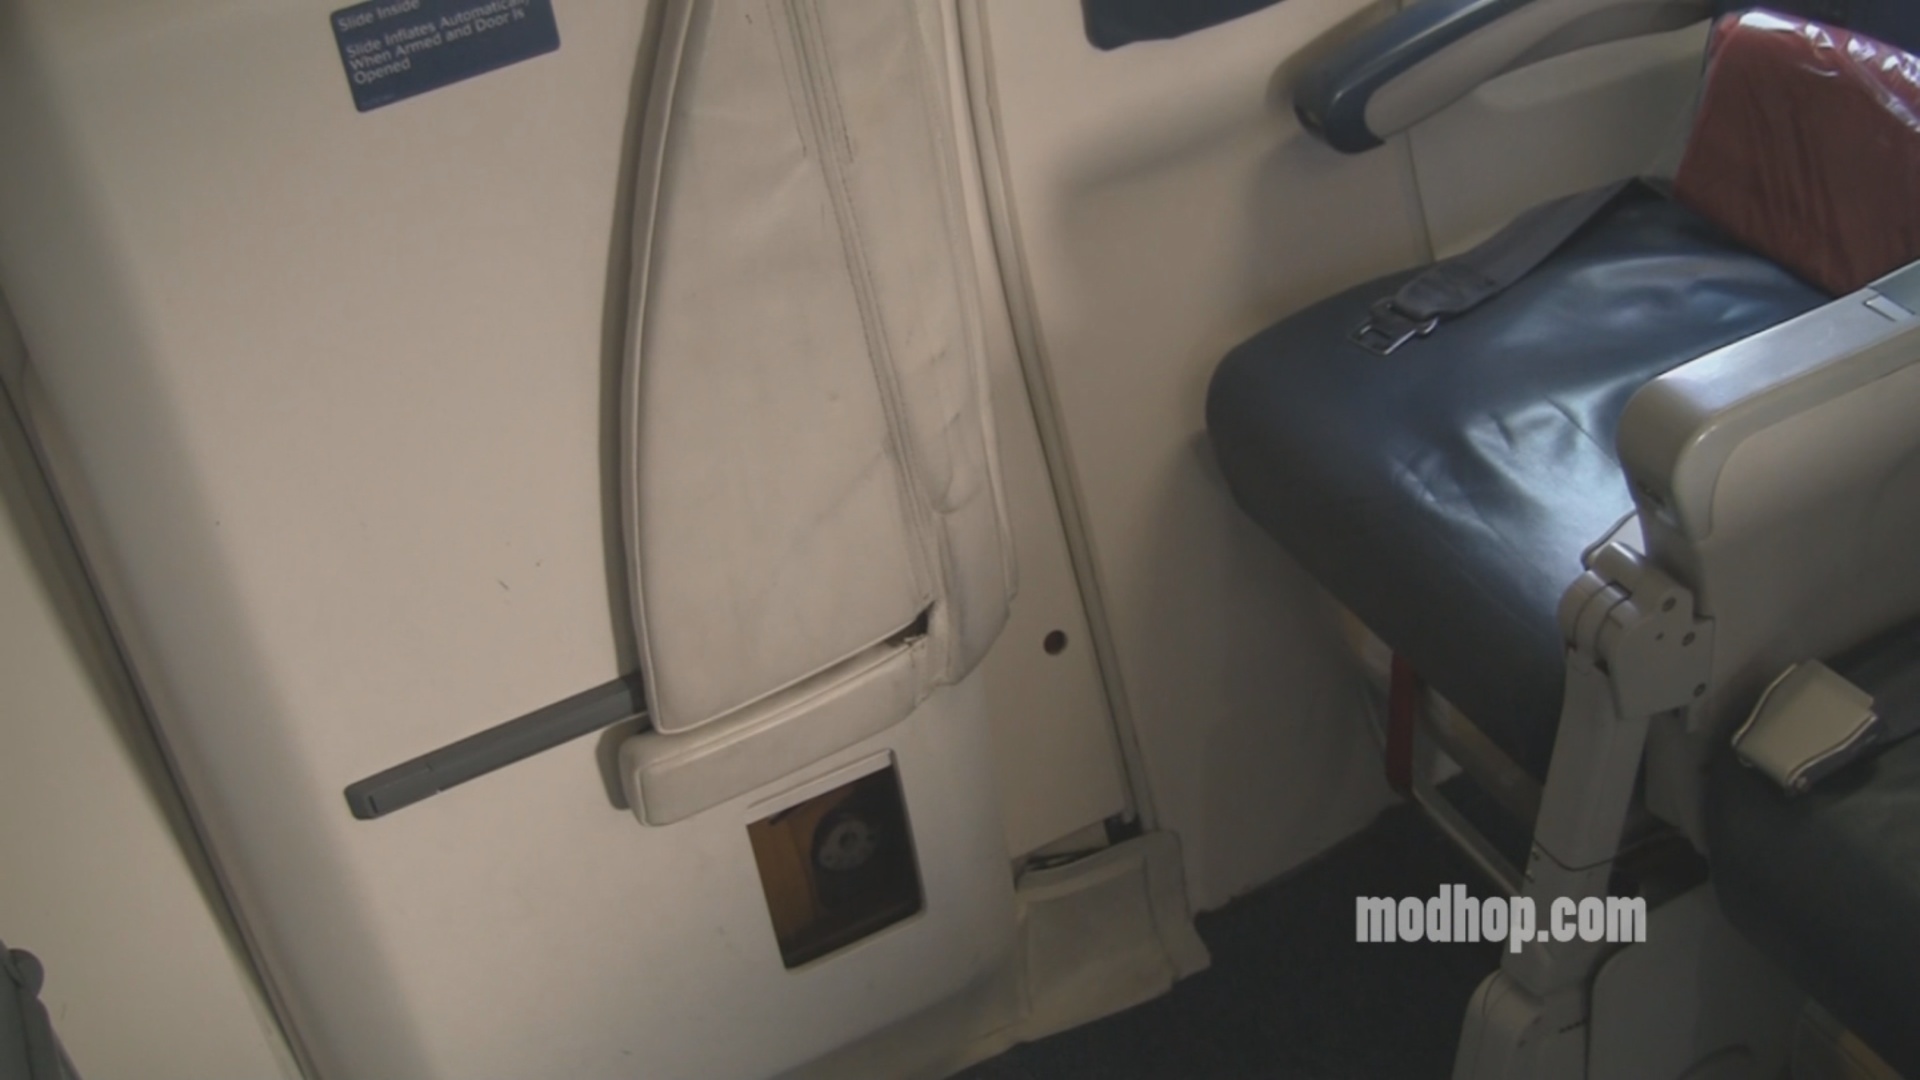 Video Delta Airlines 757 200 Seat 36f Exit Modhop Com